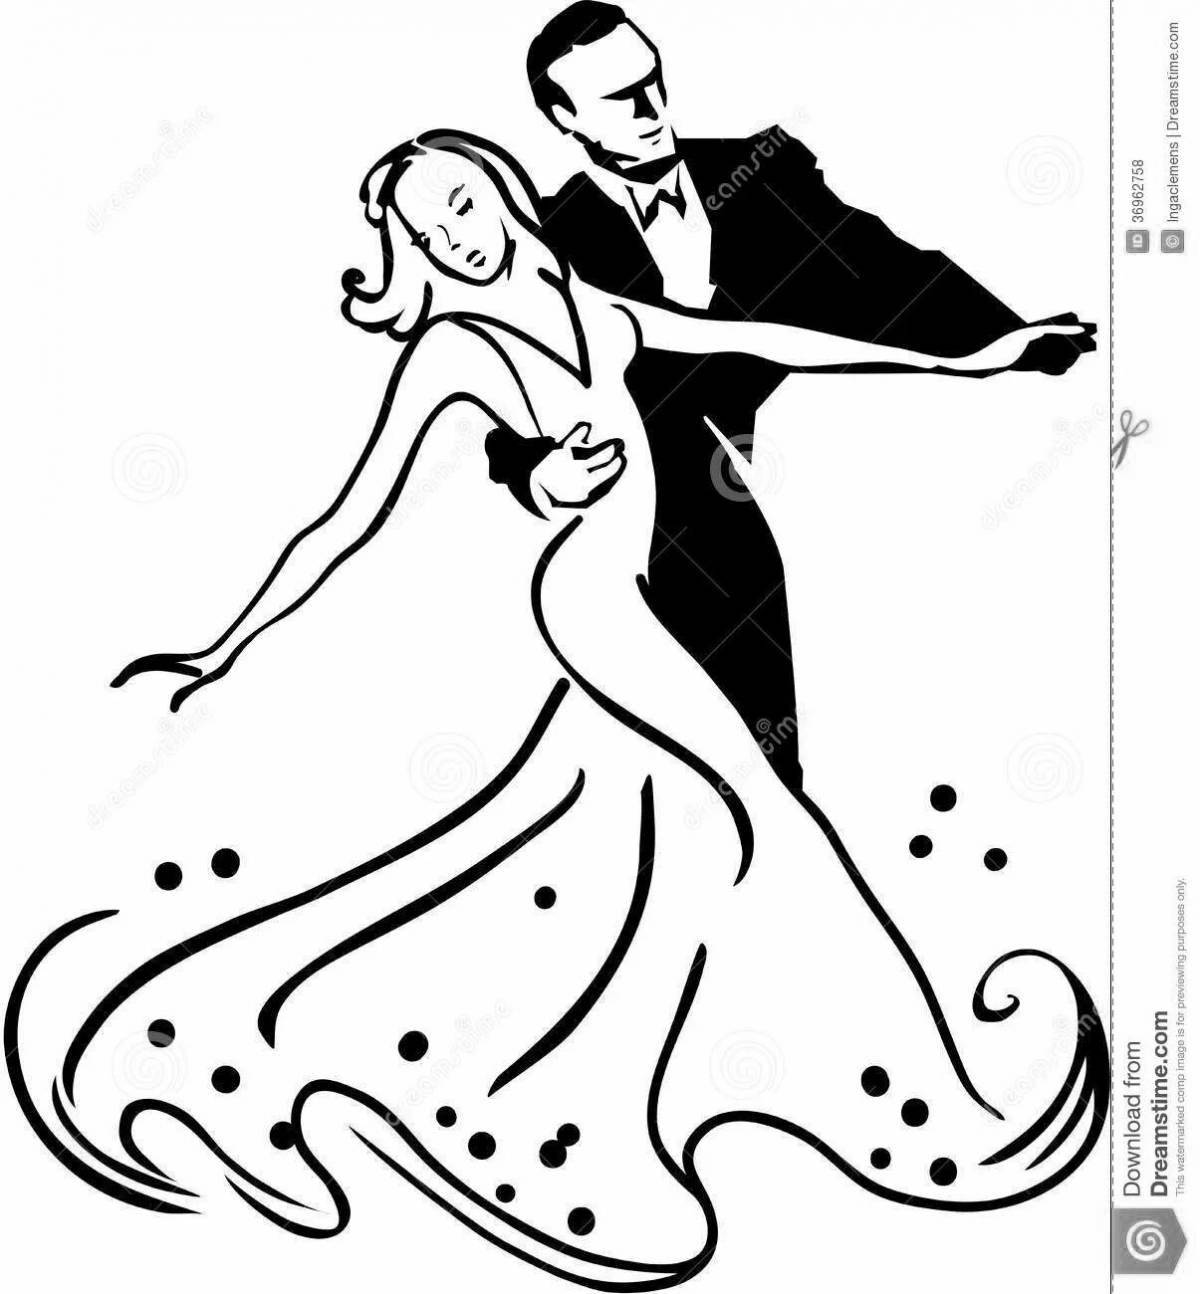 Exquisite ballroom dancing moves